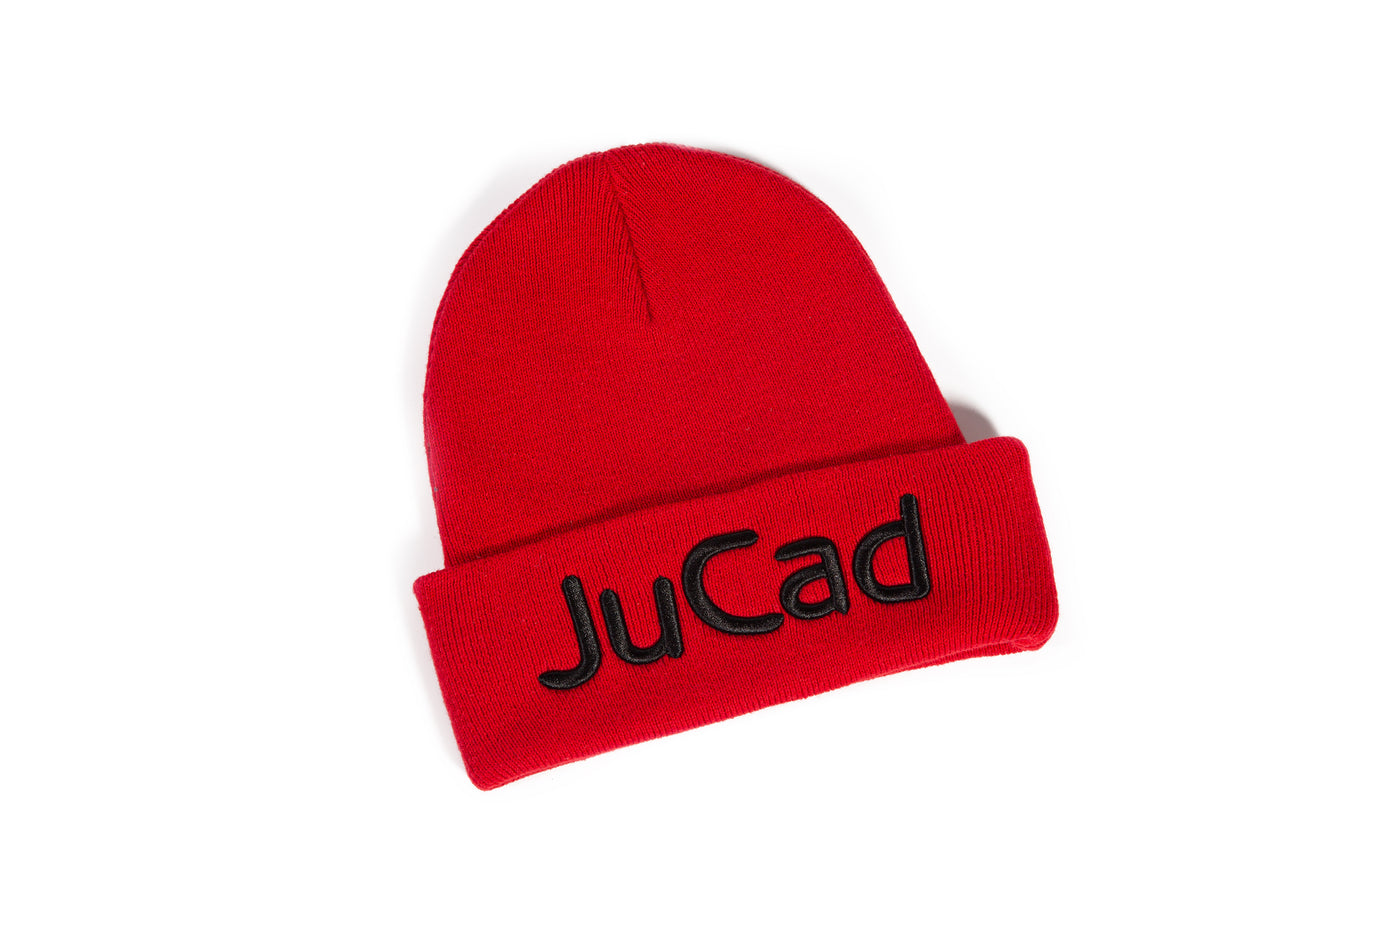 Casquette JuCad avec logo